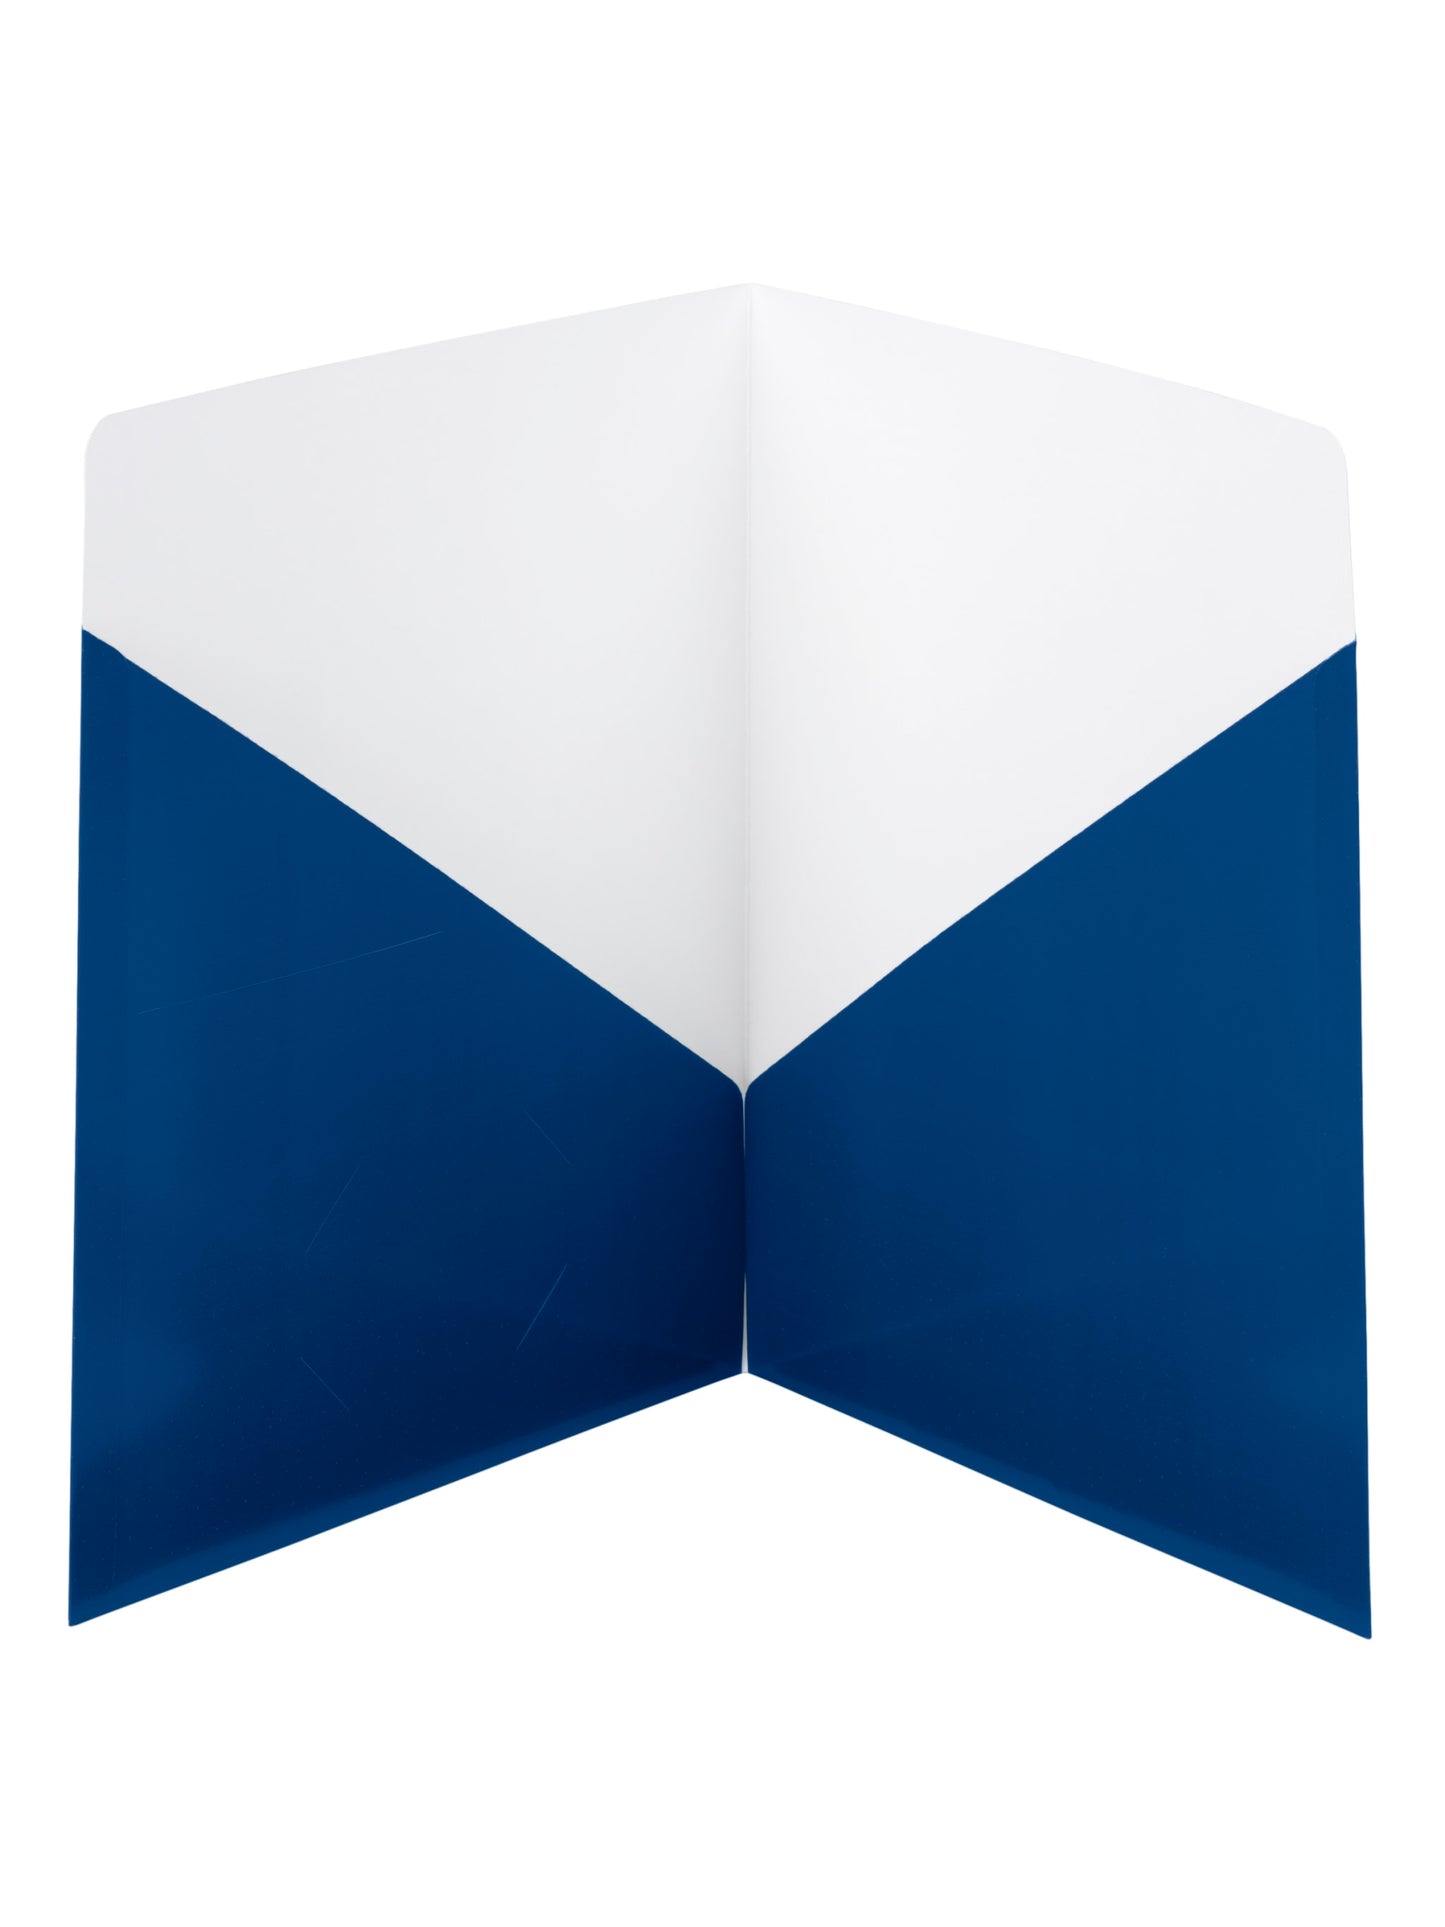 Contemporary Two-Pocket Folders, Dark Blue Color, Letter Size, Set of 0, 30086486879607